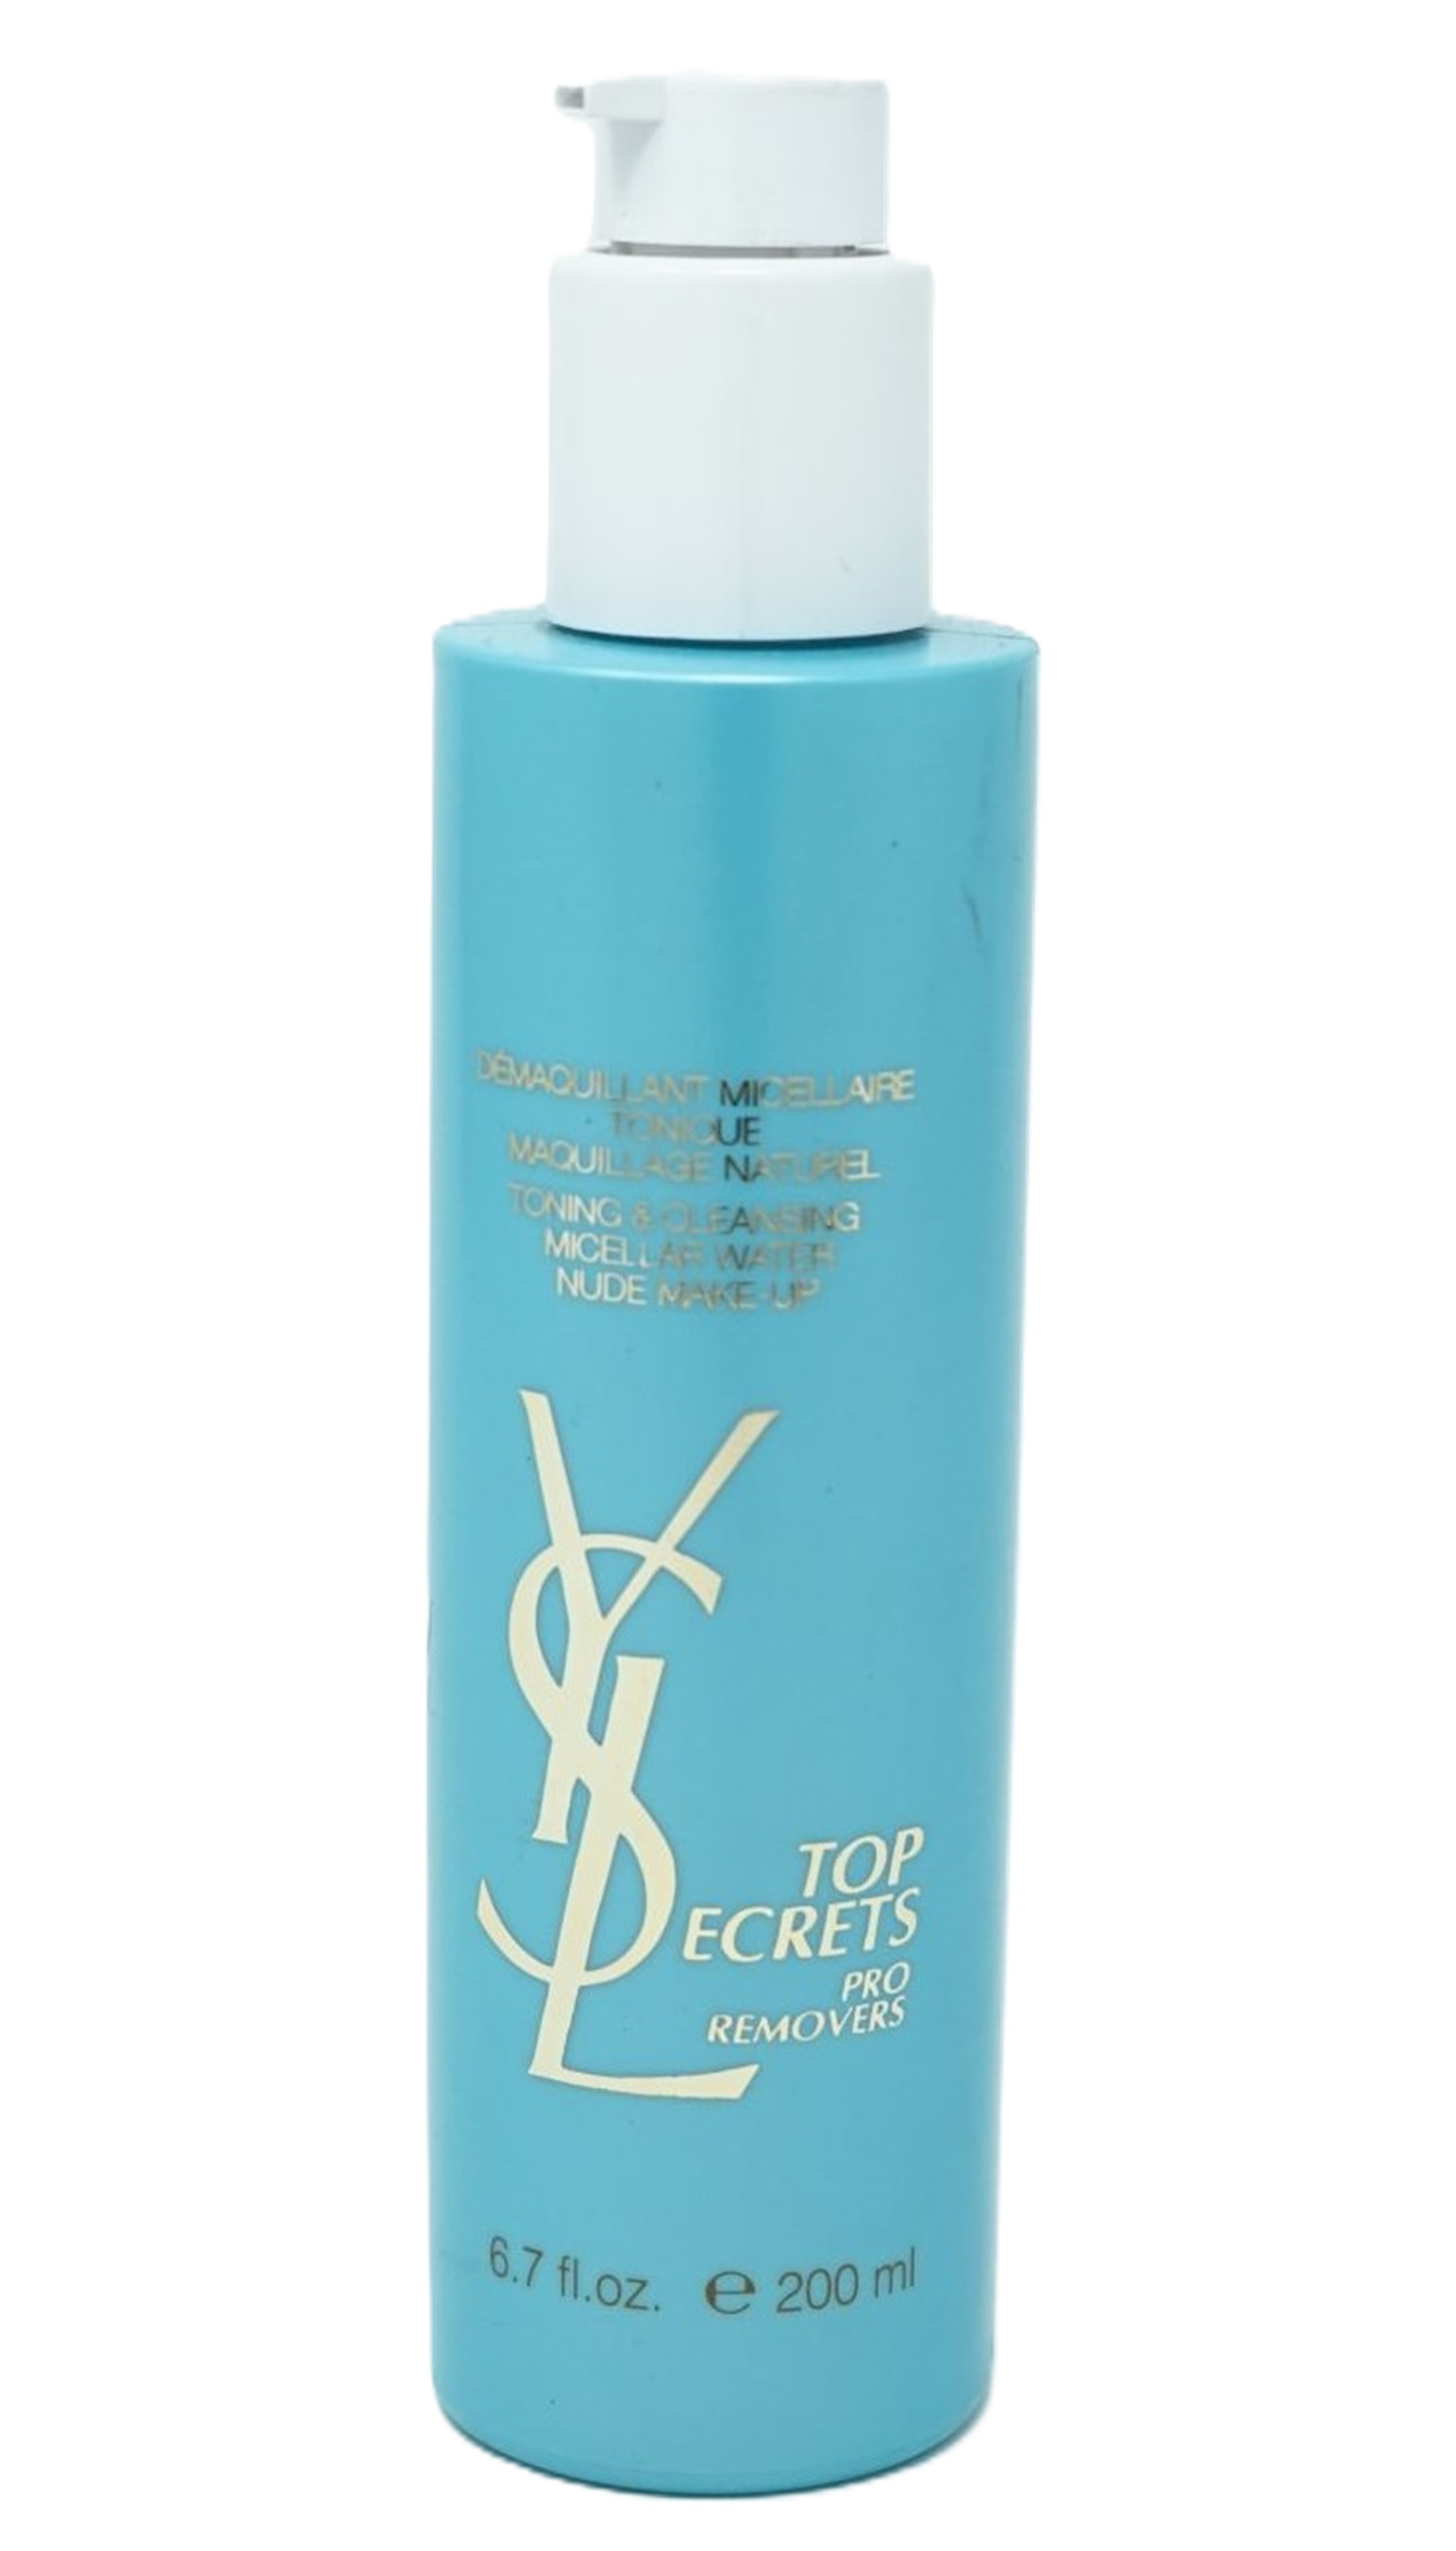 Yves Saint Laurent Top Secrets Toning & Cleansing Micellar Wasser 200 ml